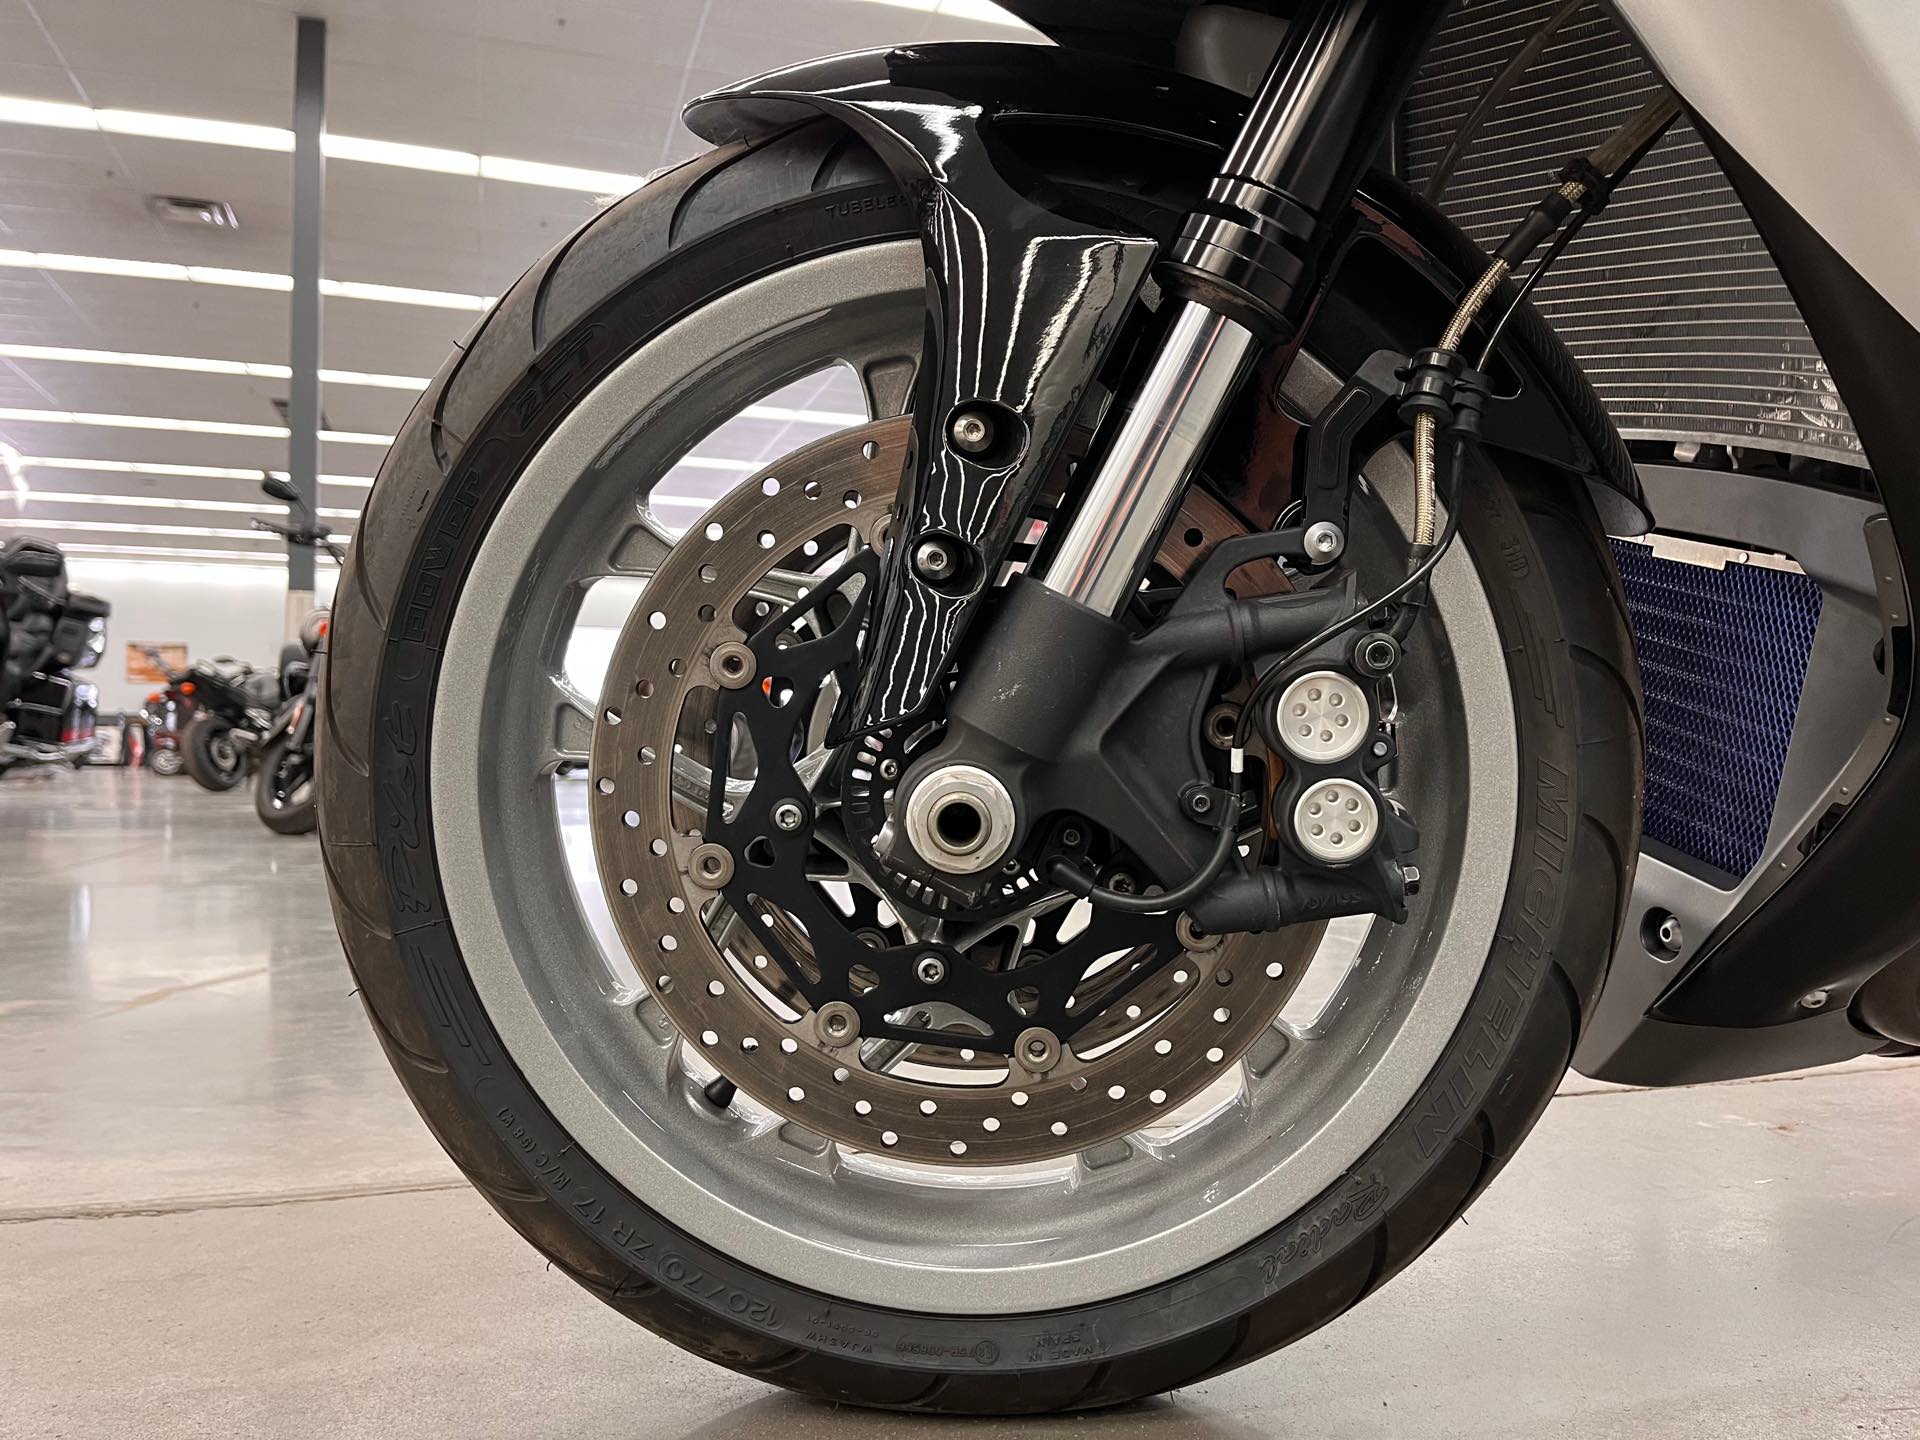 2015 Yamaha YZF R1M at Aces Motorcycles - Denver